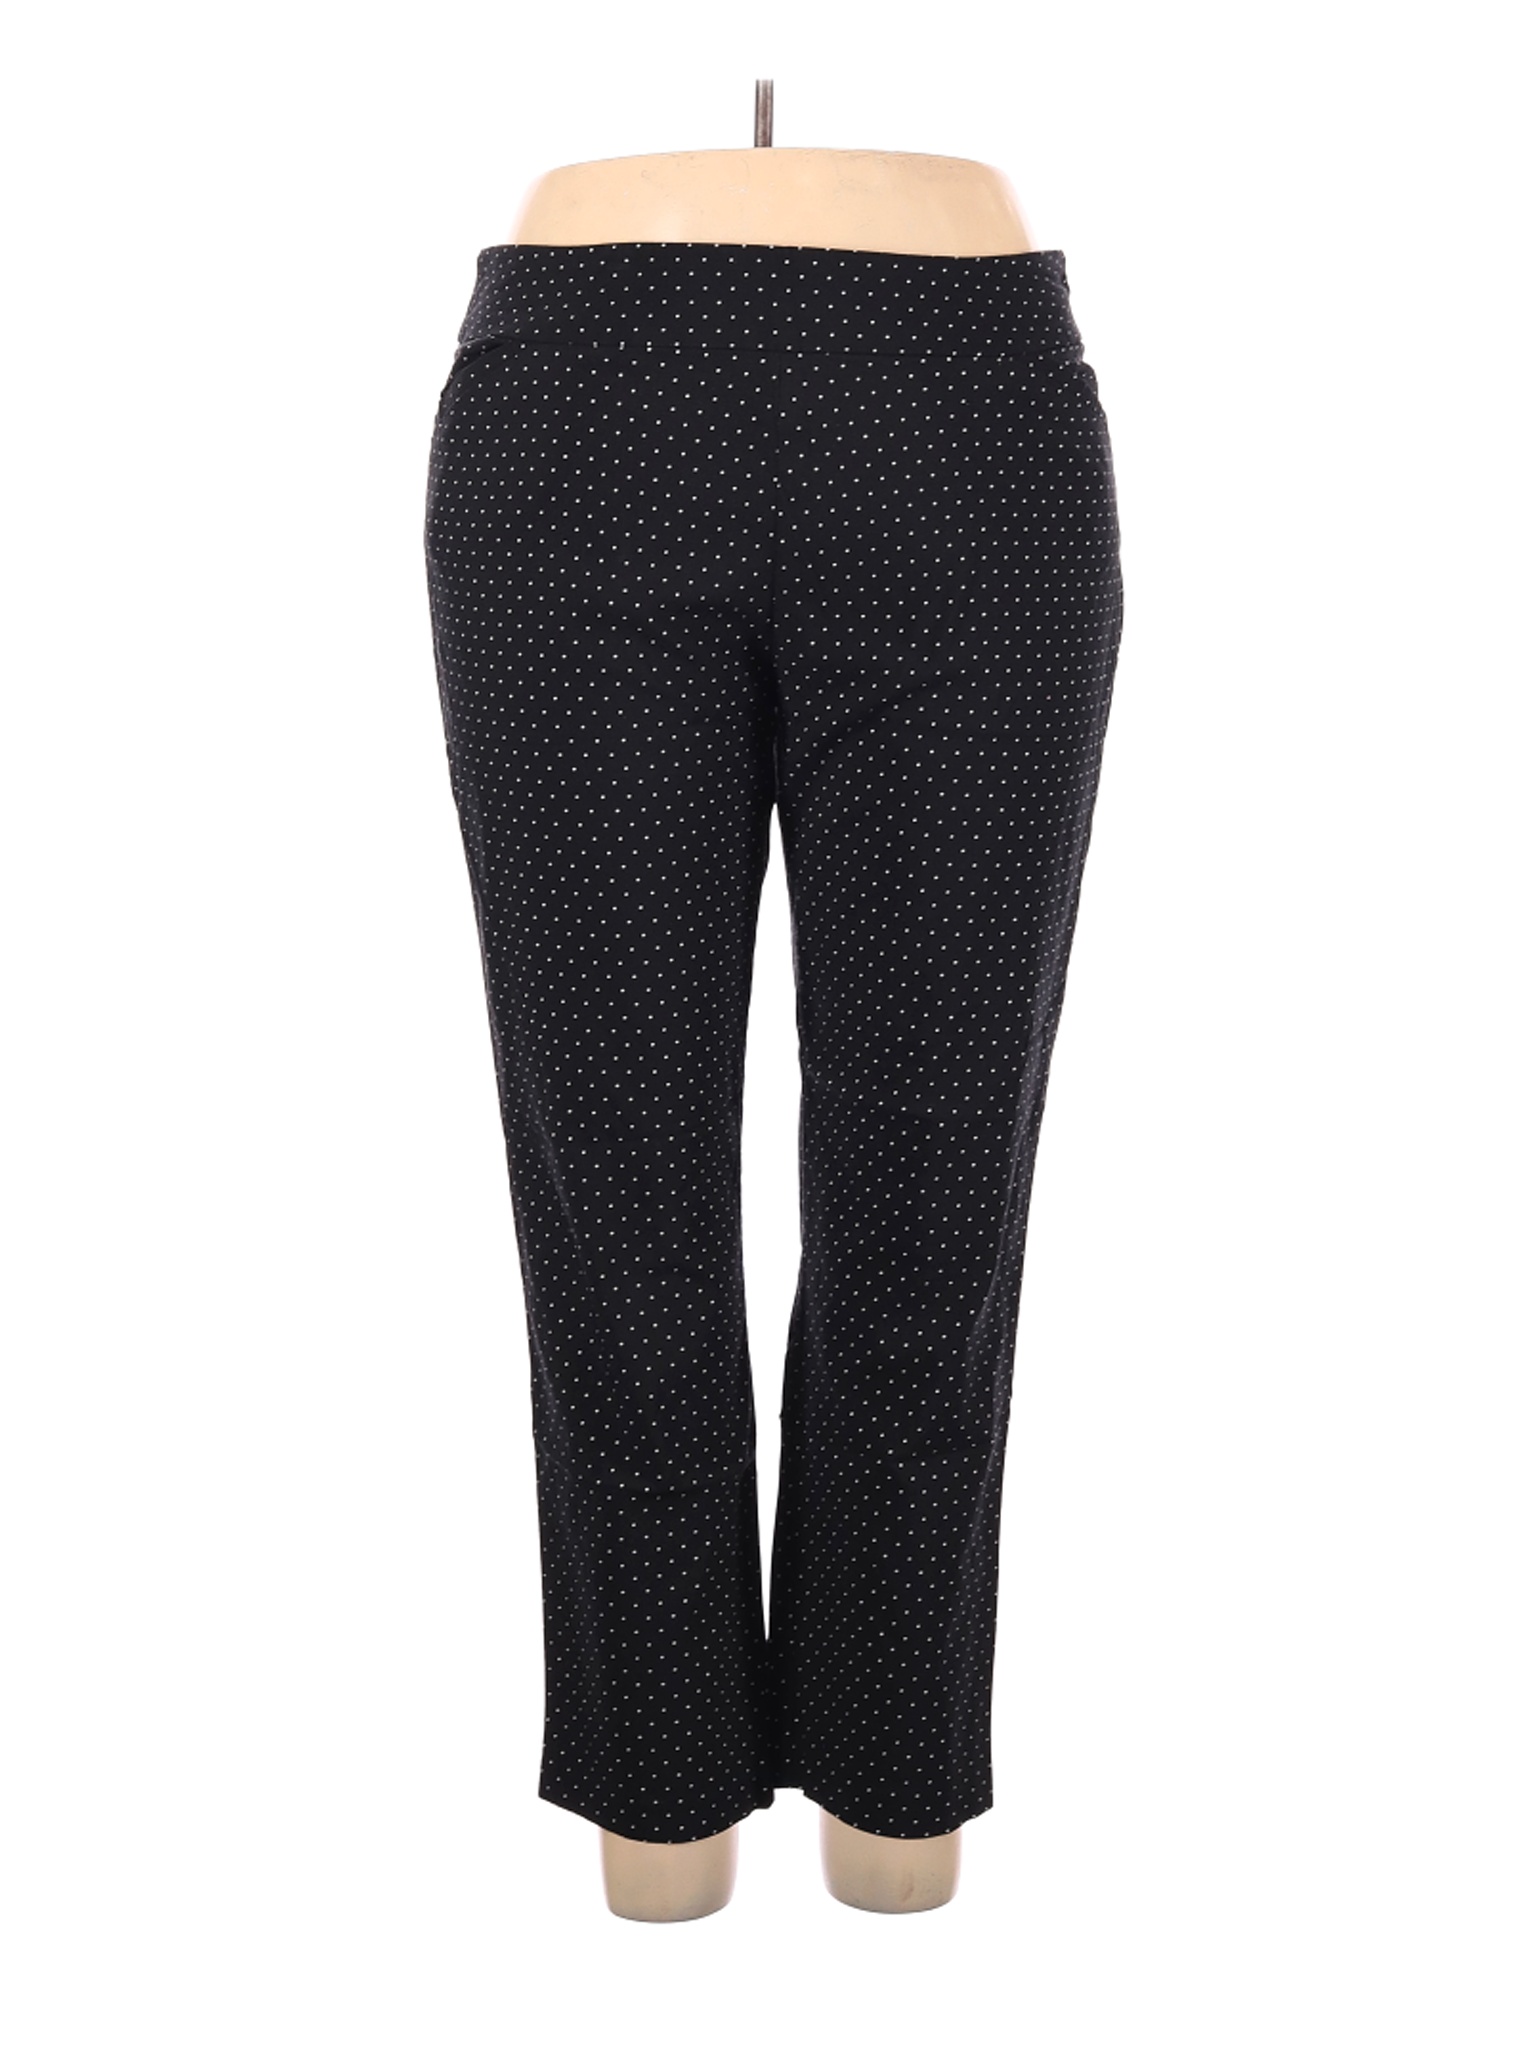 George Women Black Casual Pants 3X Plus | eBay